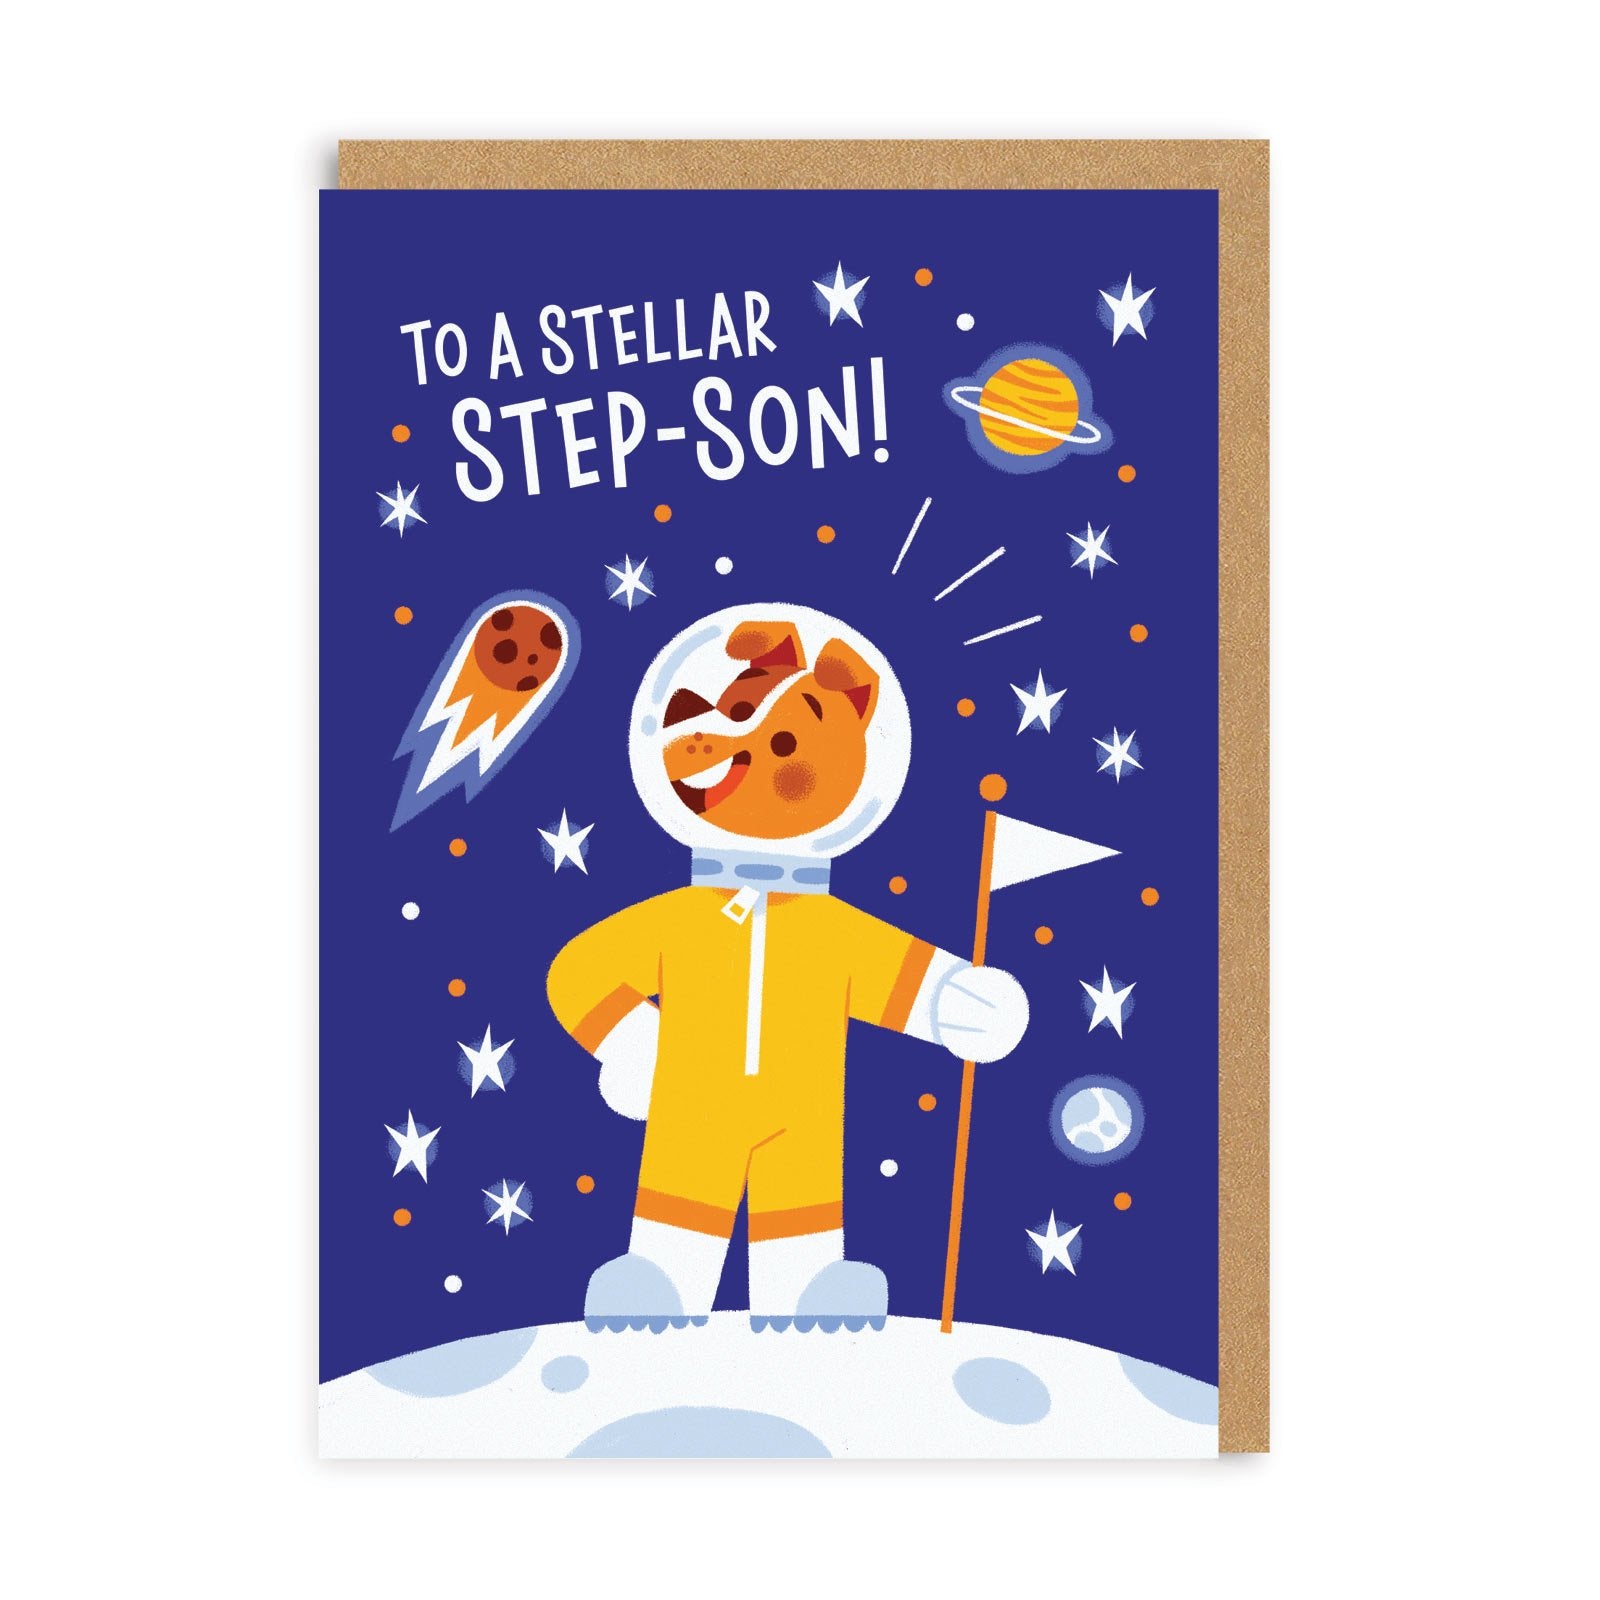 Stellar Step-Son Greeting Card